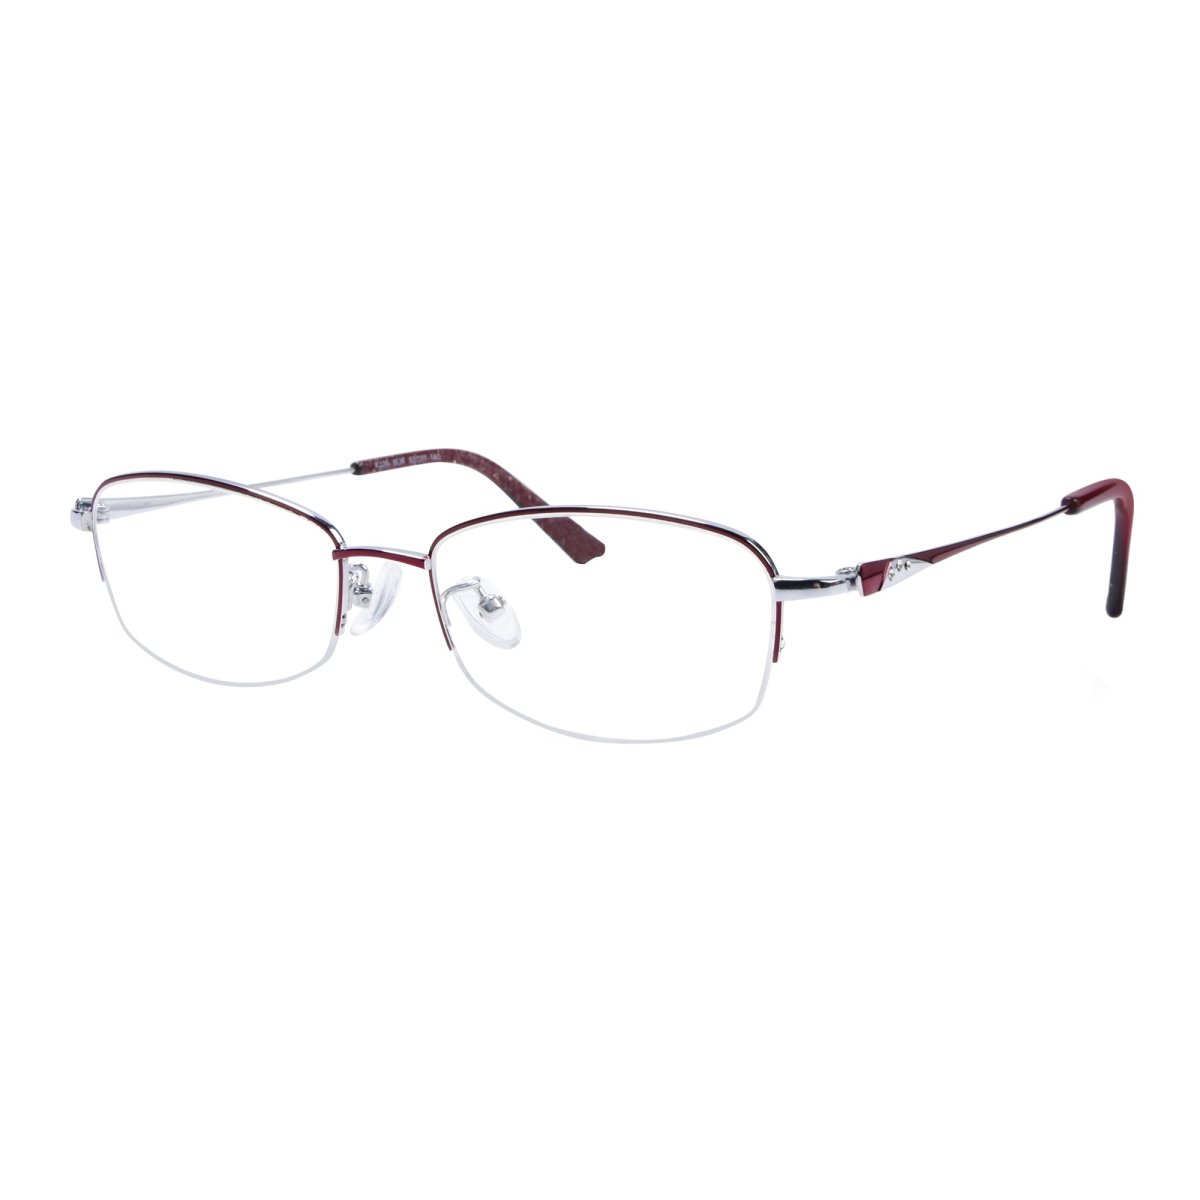 Prescription Eyeglasses Rx Specs Titanium Glasses Half-rim Women ...